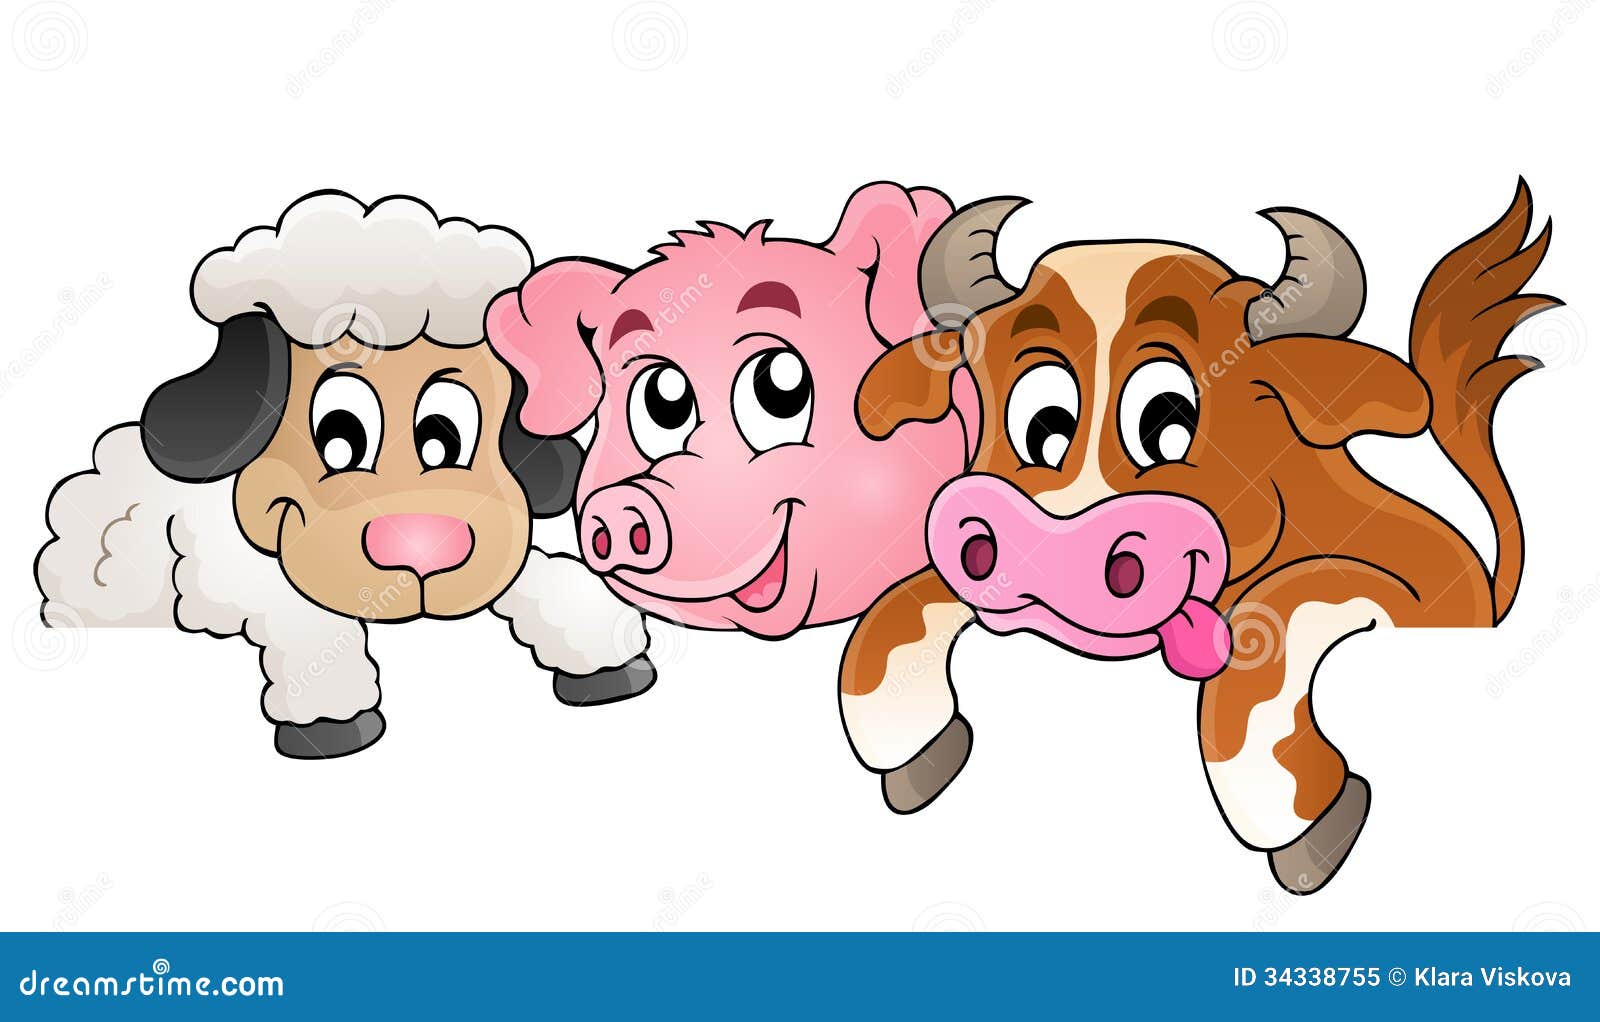 clipart farm animals cartoon - photo #48